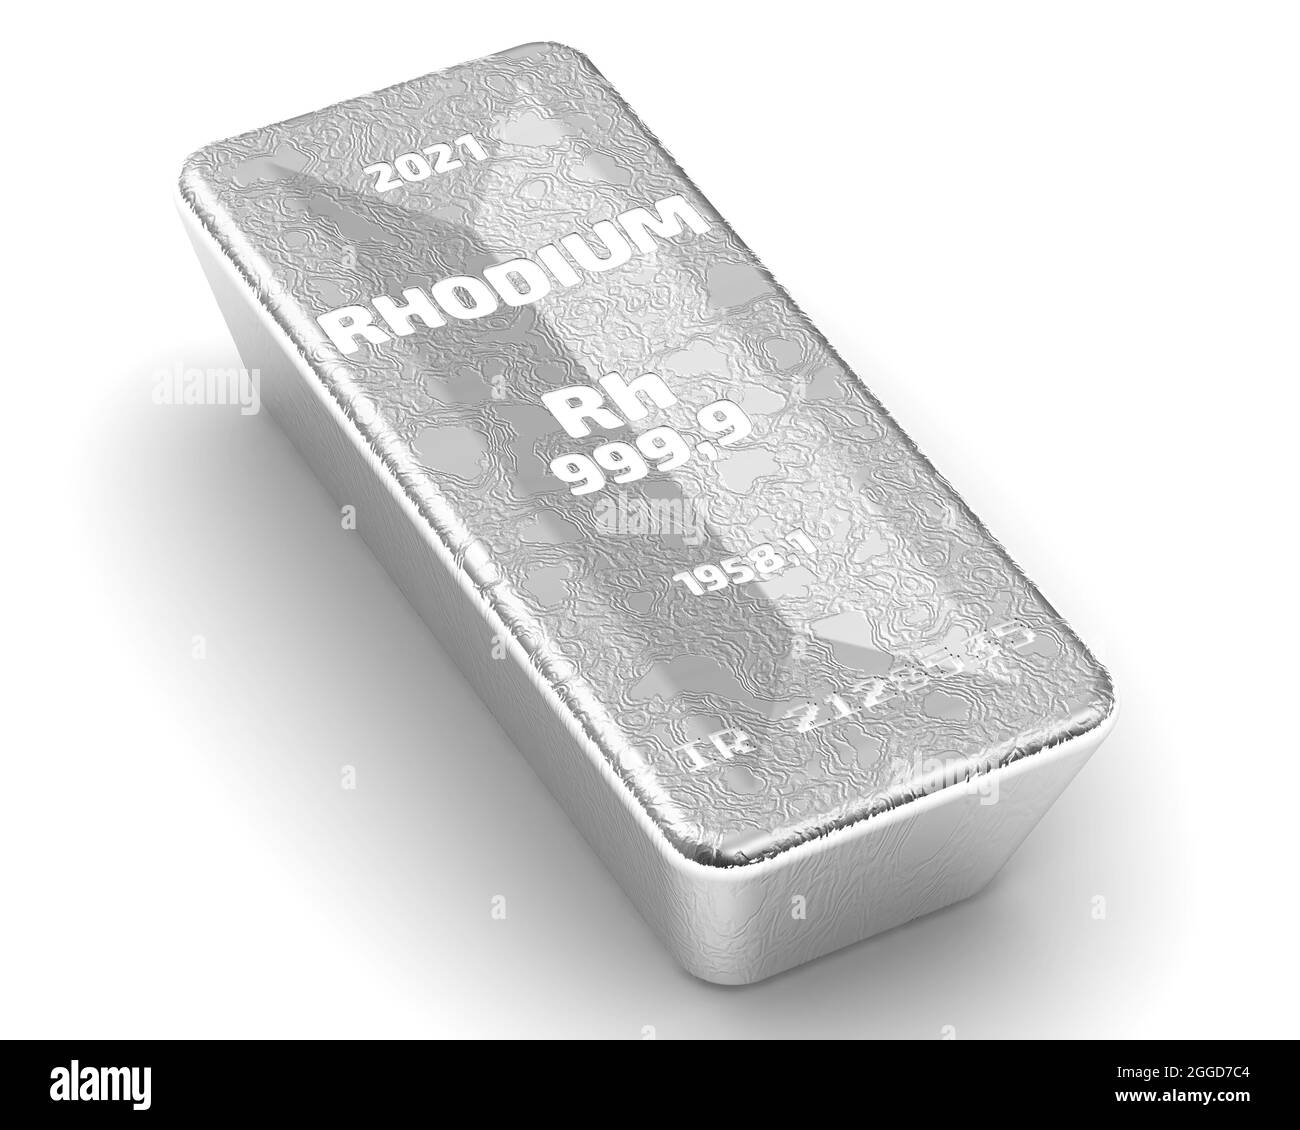 The highest standard rhodium bar. One ingot of 999.9 Fine Rhodium bar on white background. 3D illustration Stock Photo